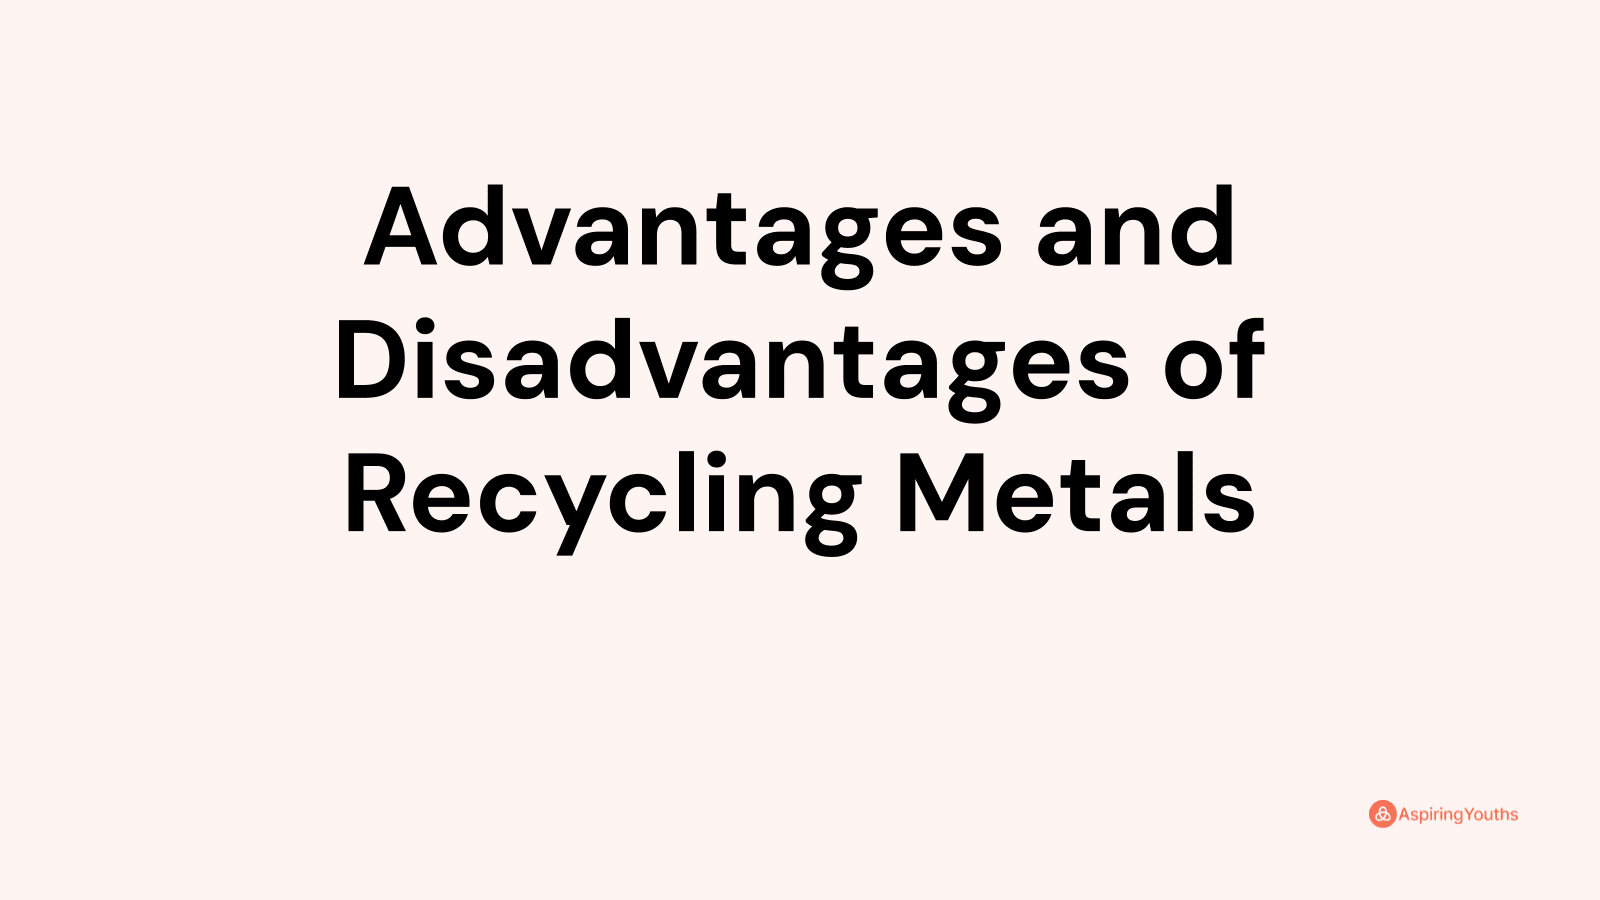 Advantages and disadvantages of Recycling Metals